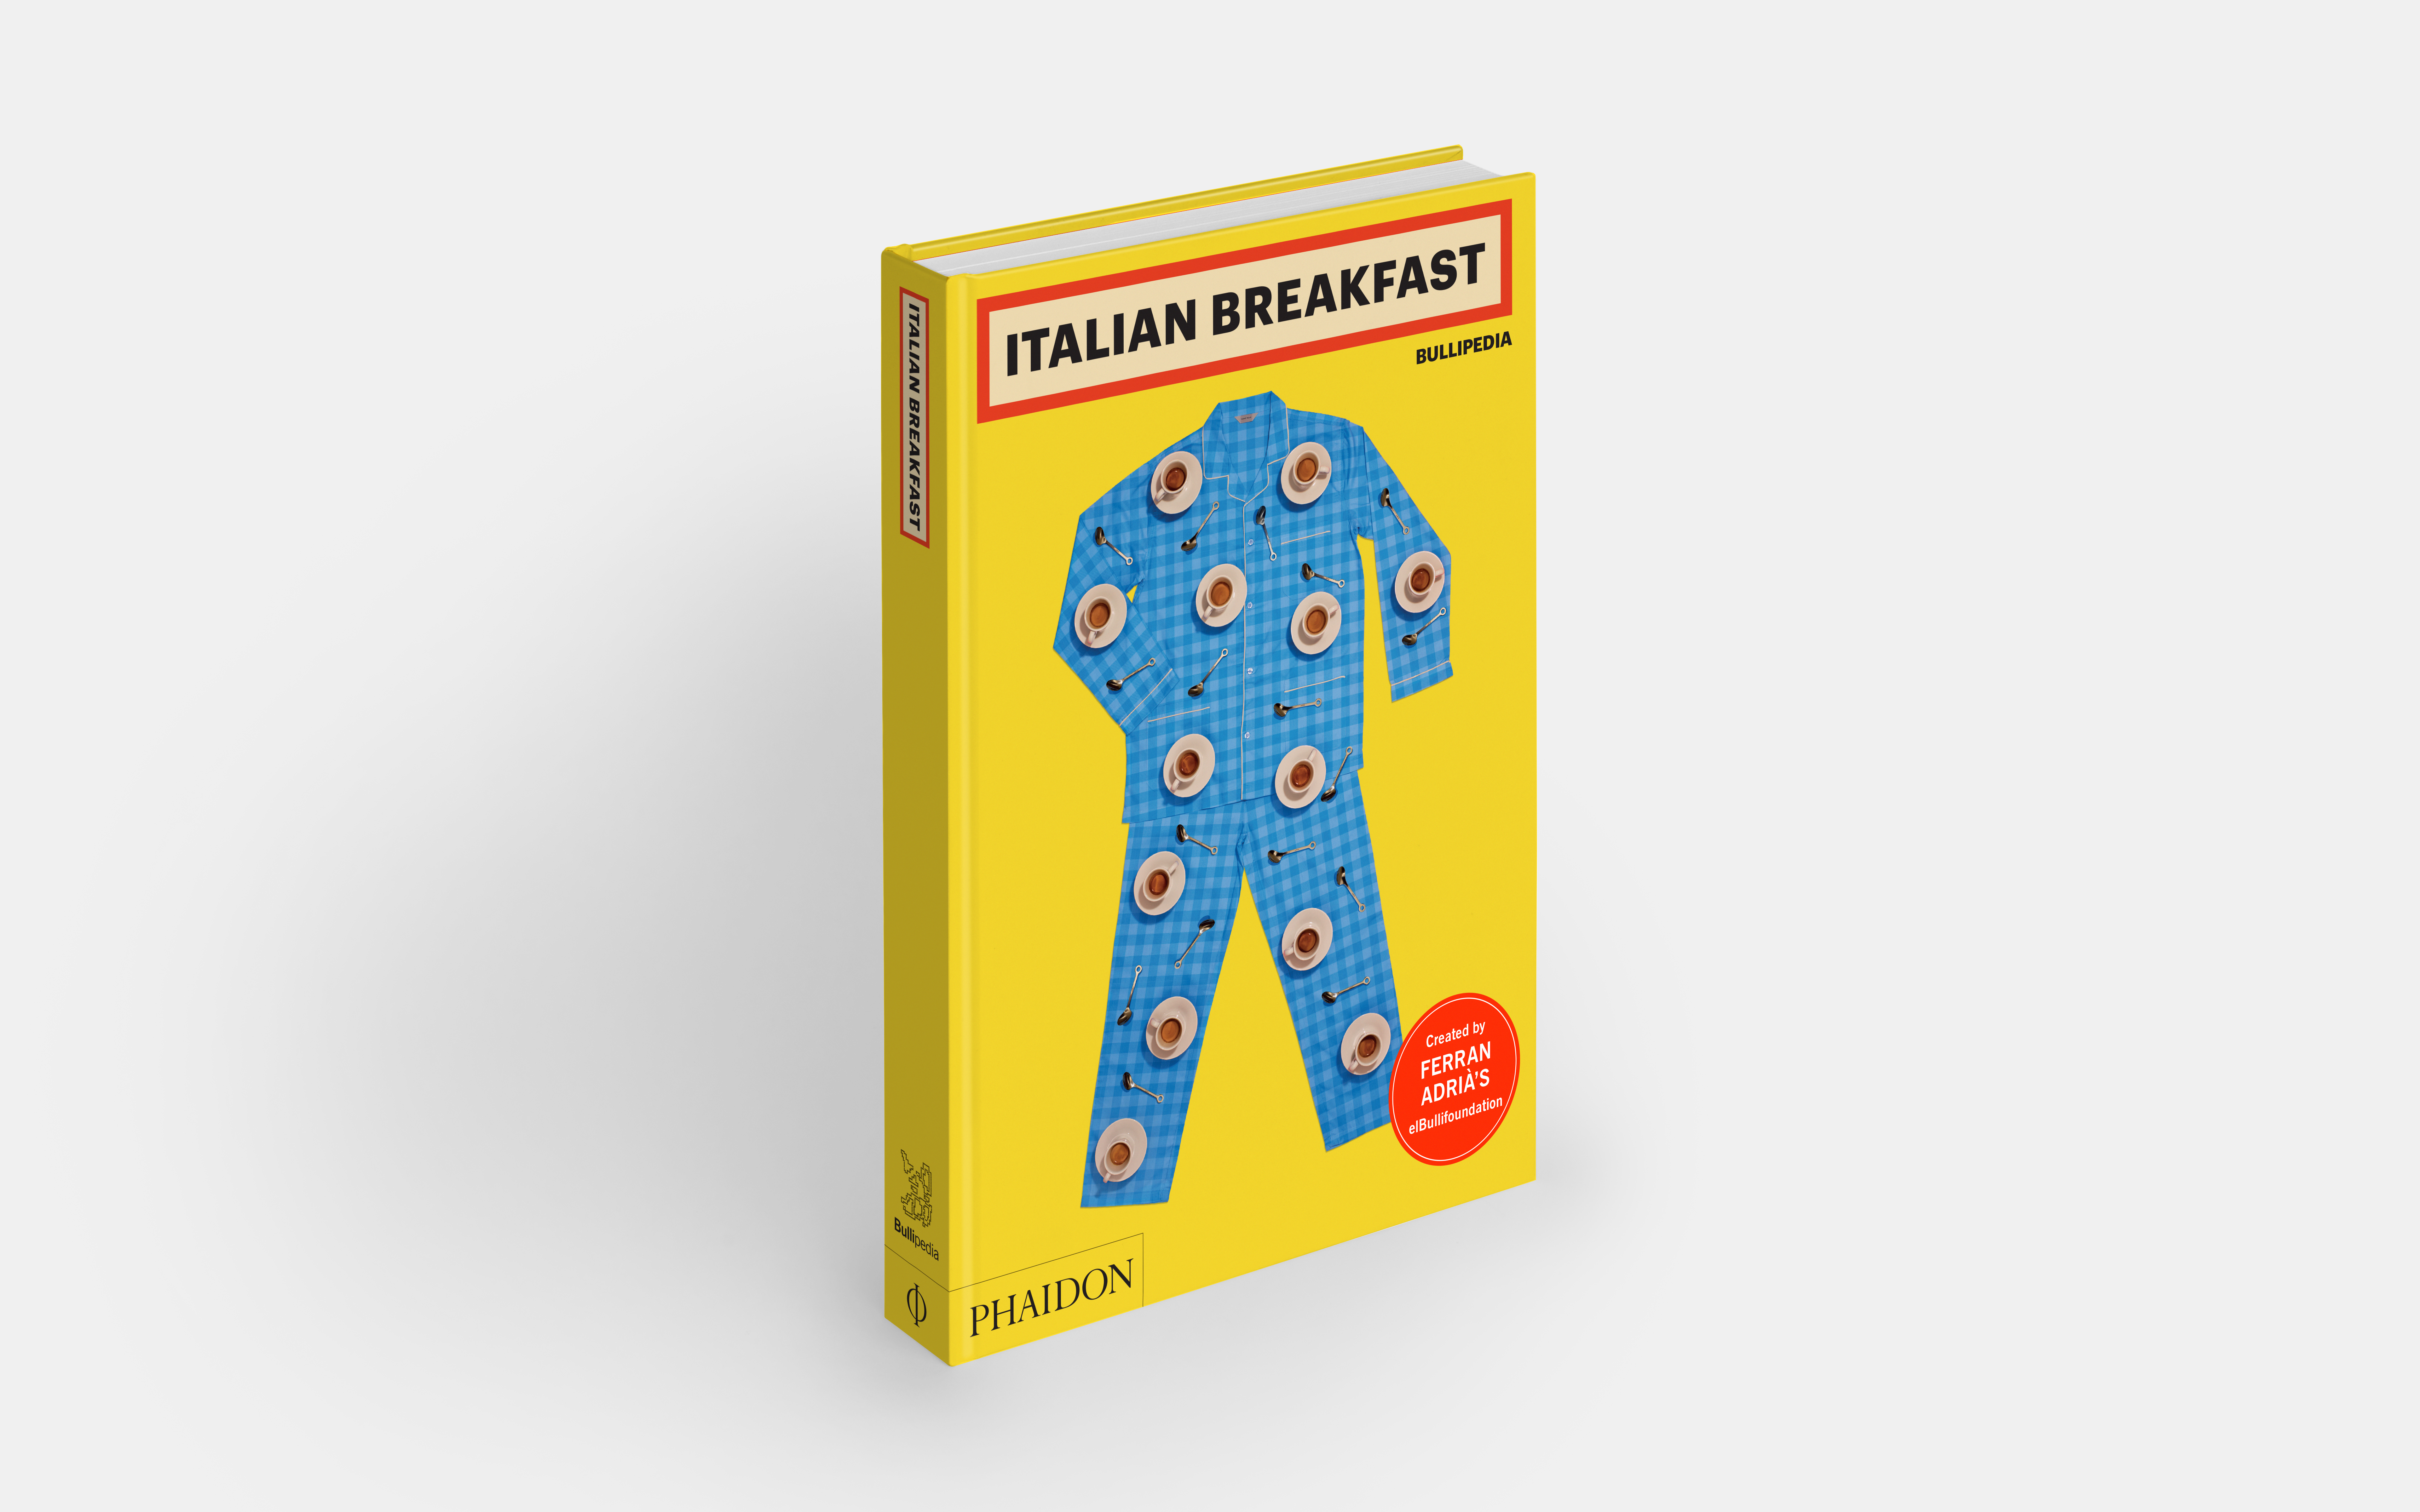 Italian Breakfast